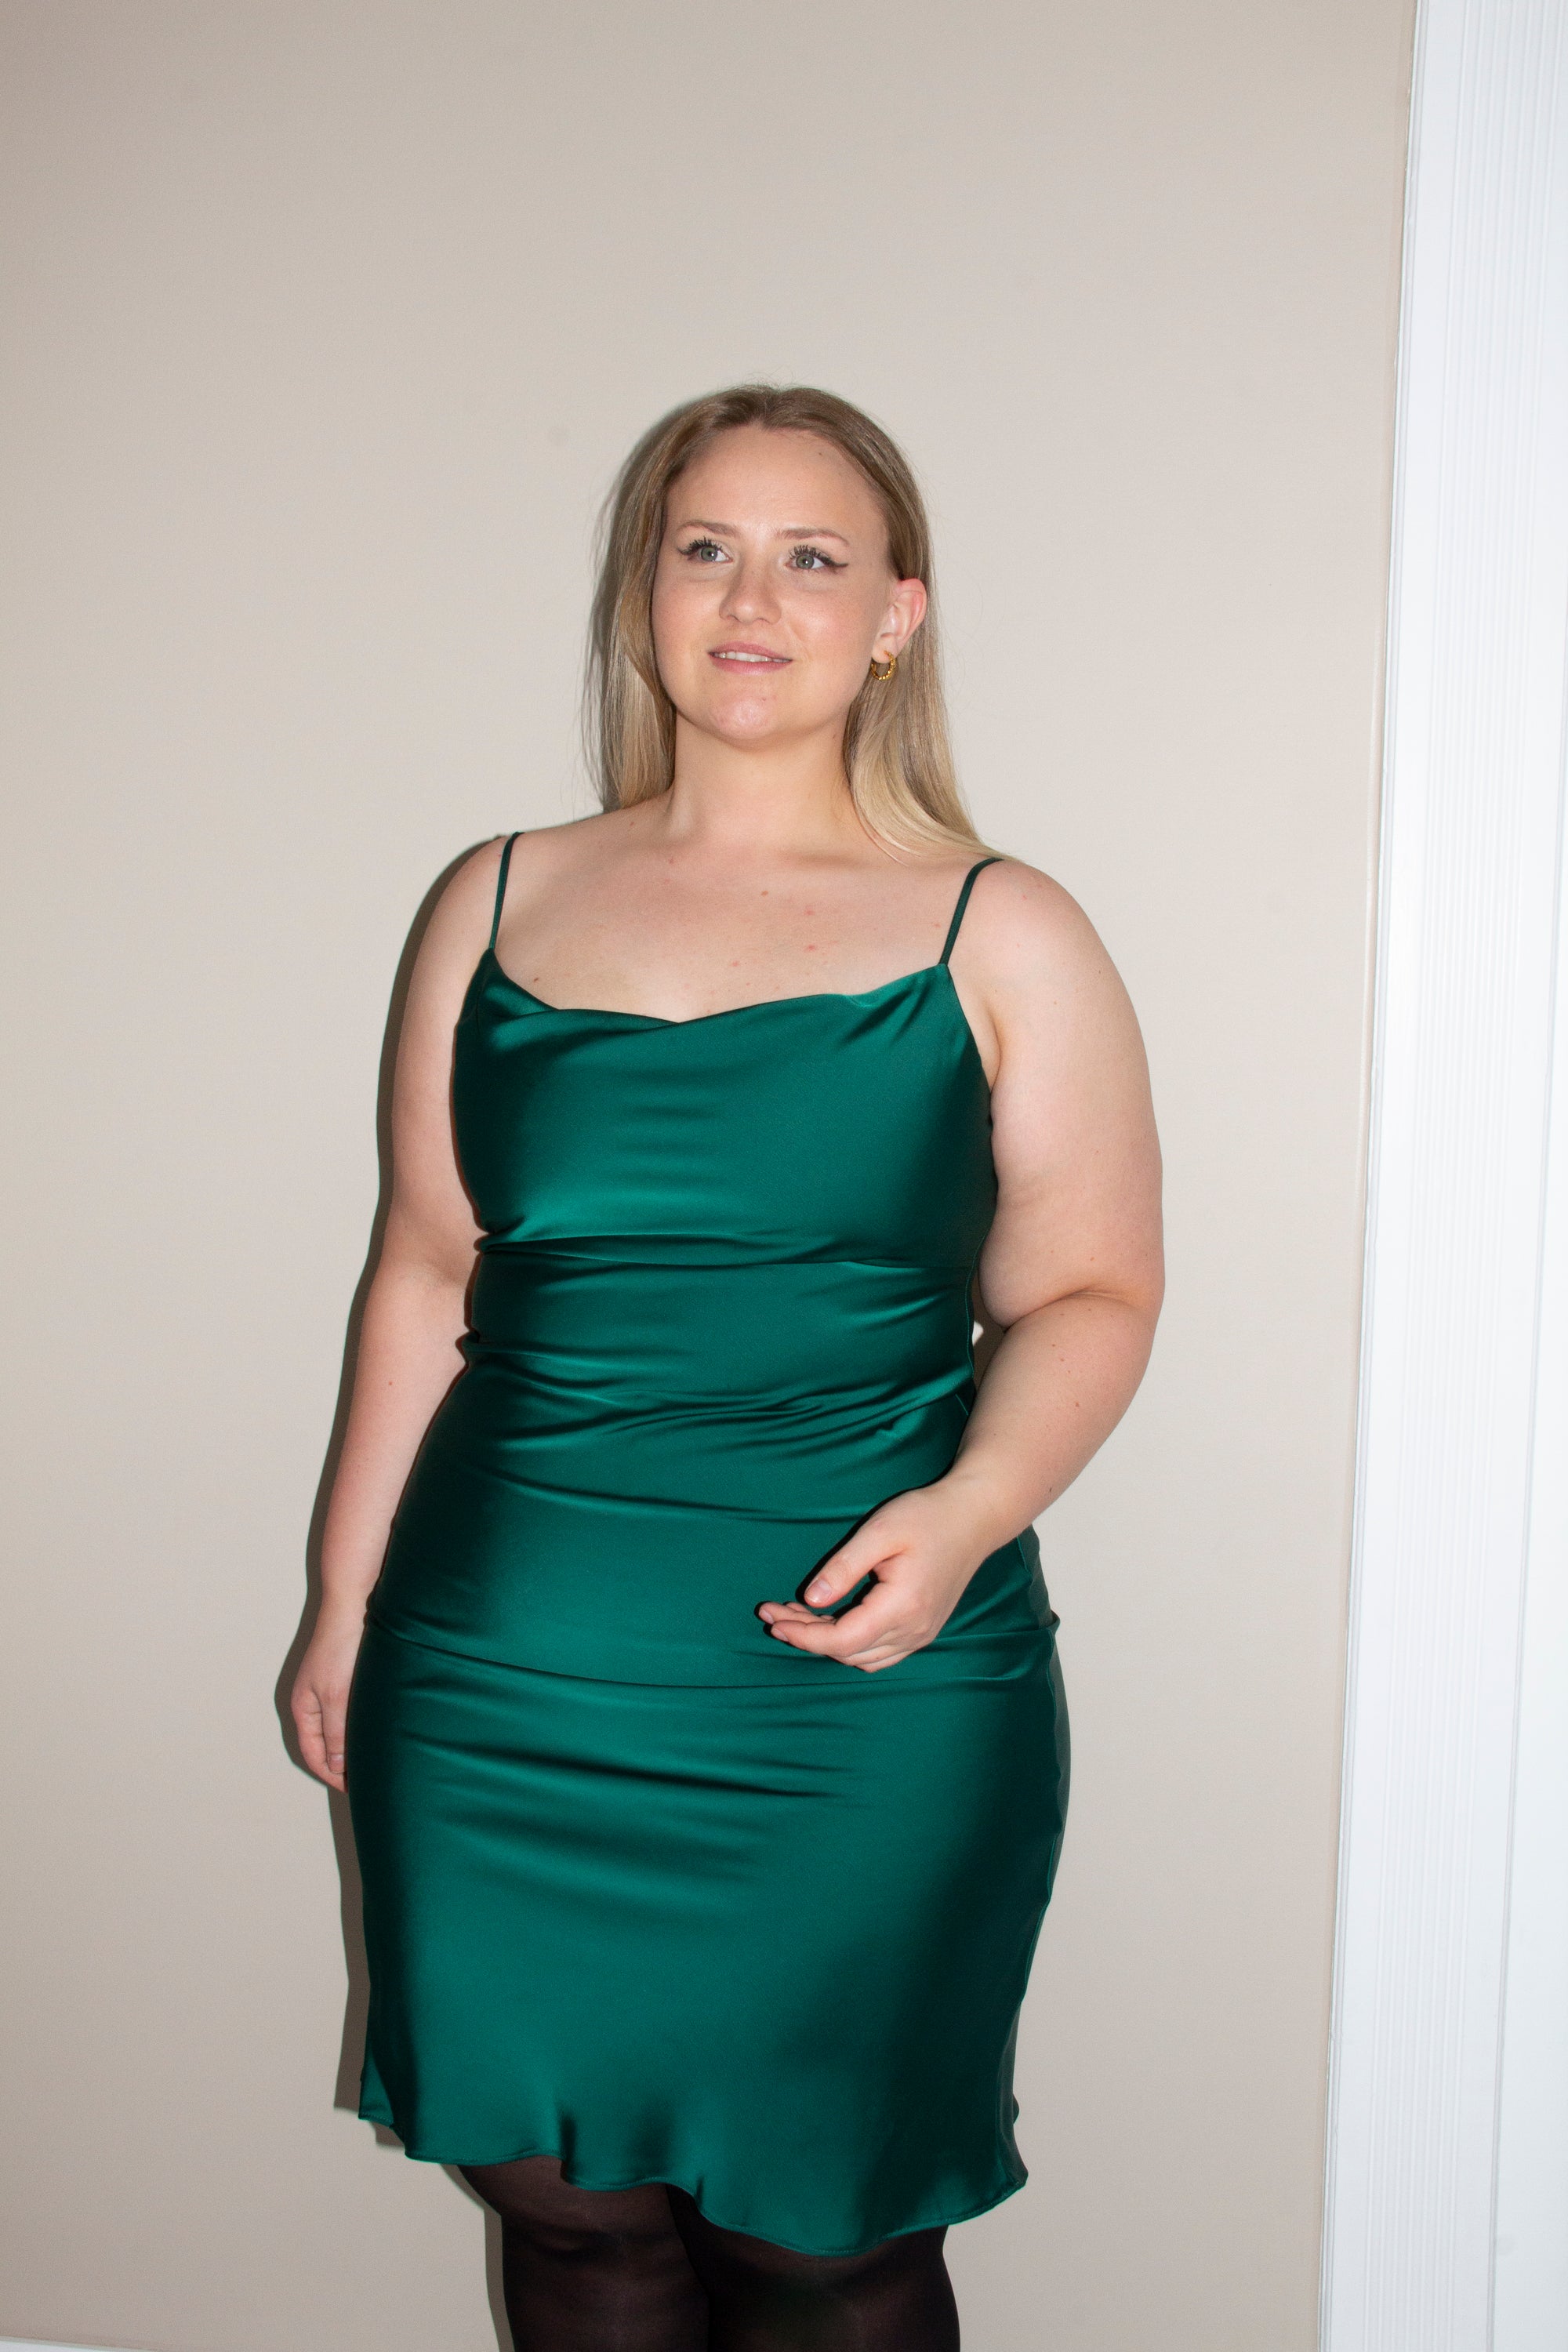 7SLIM - Dark Green Dress